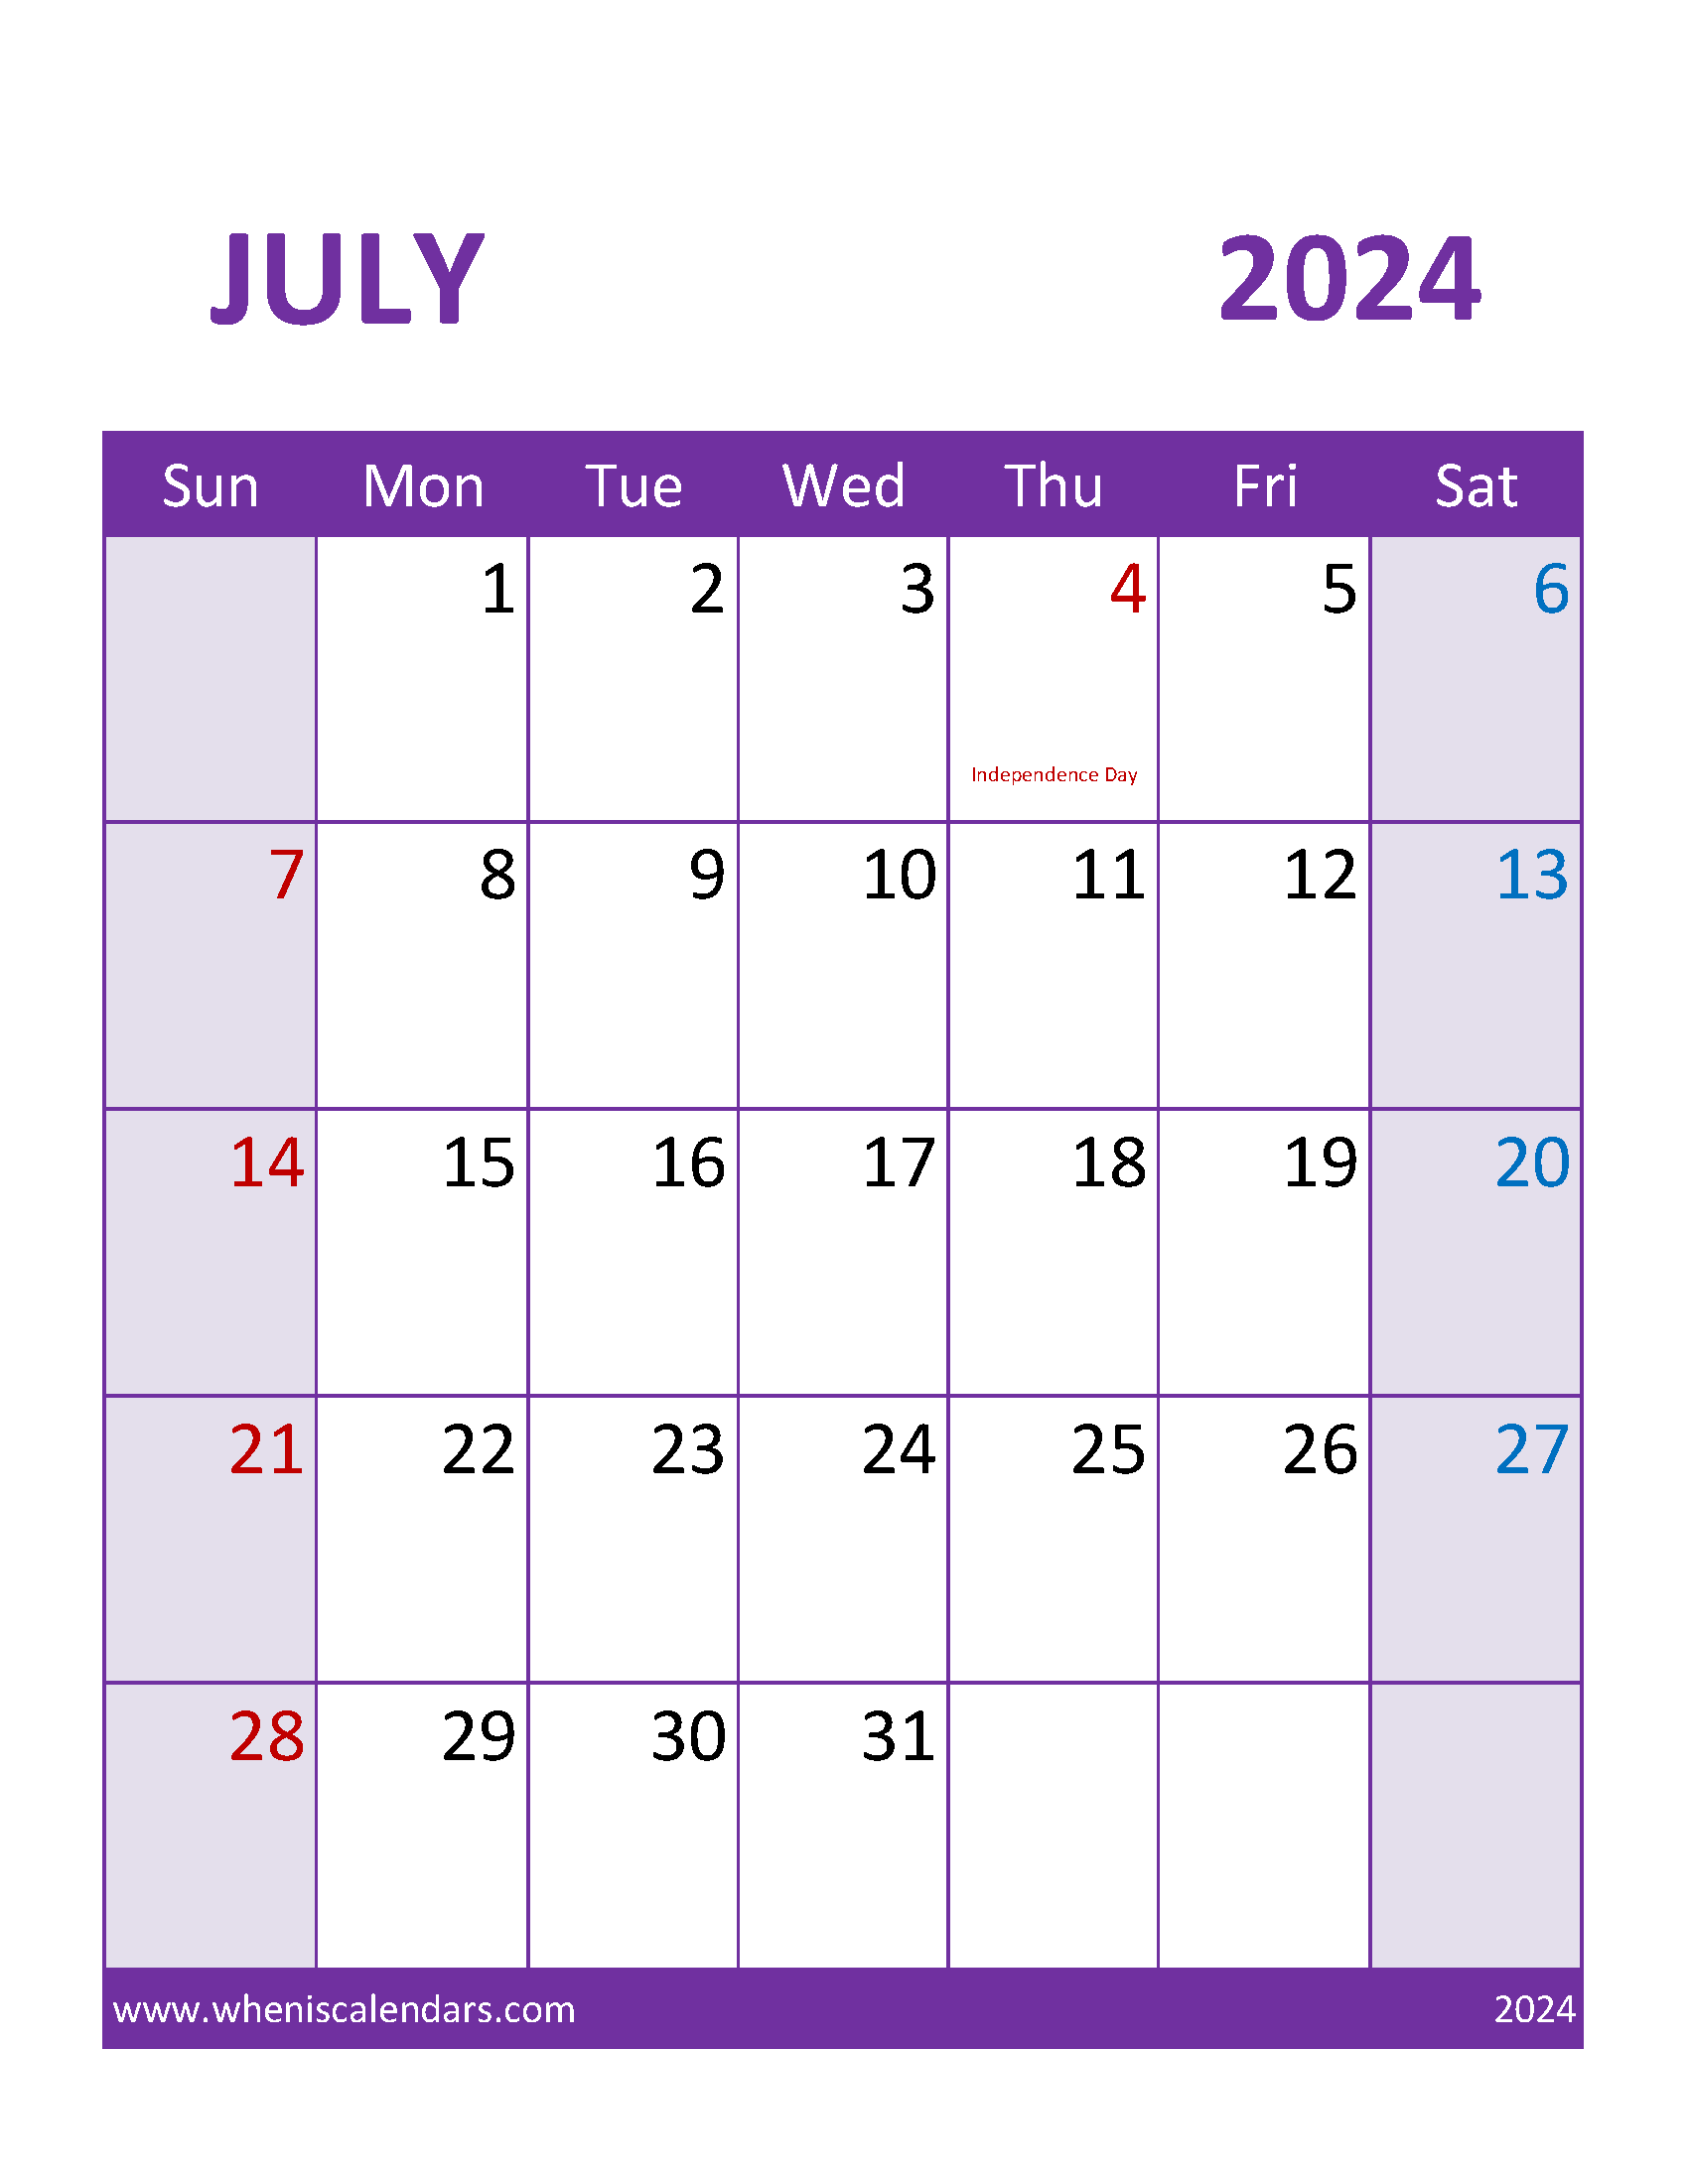 July 2024 Calendar Print out